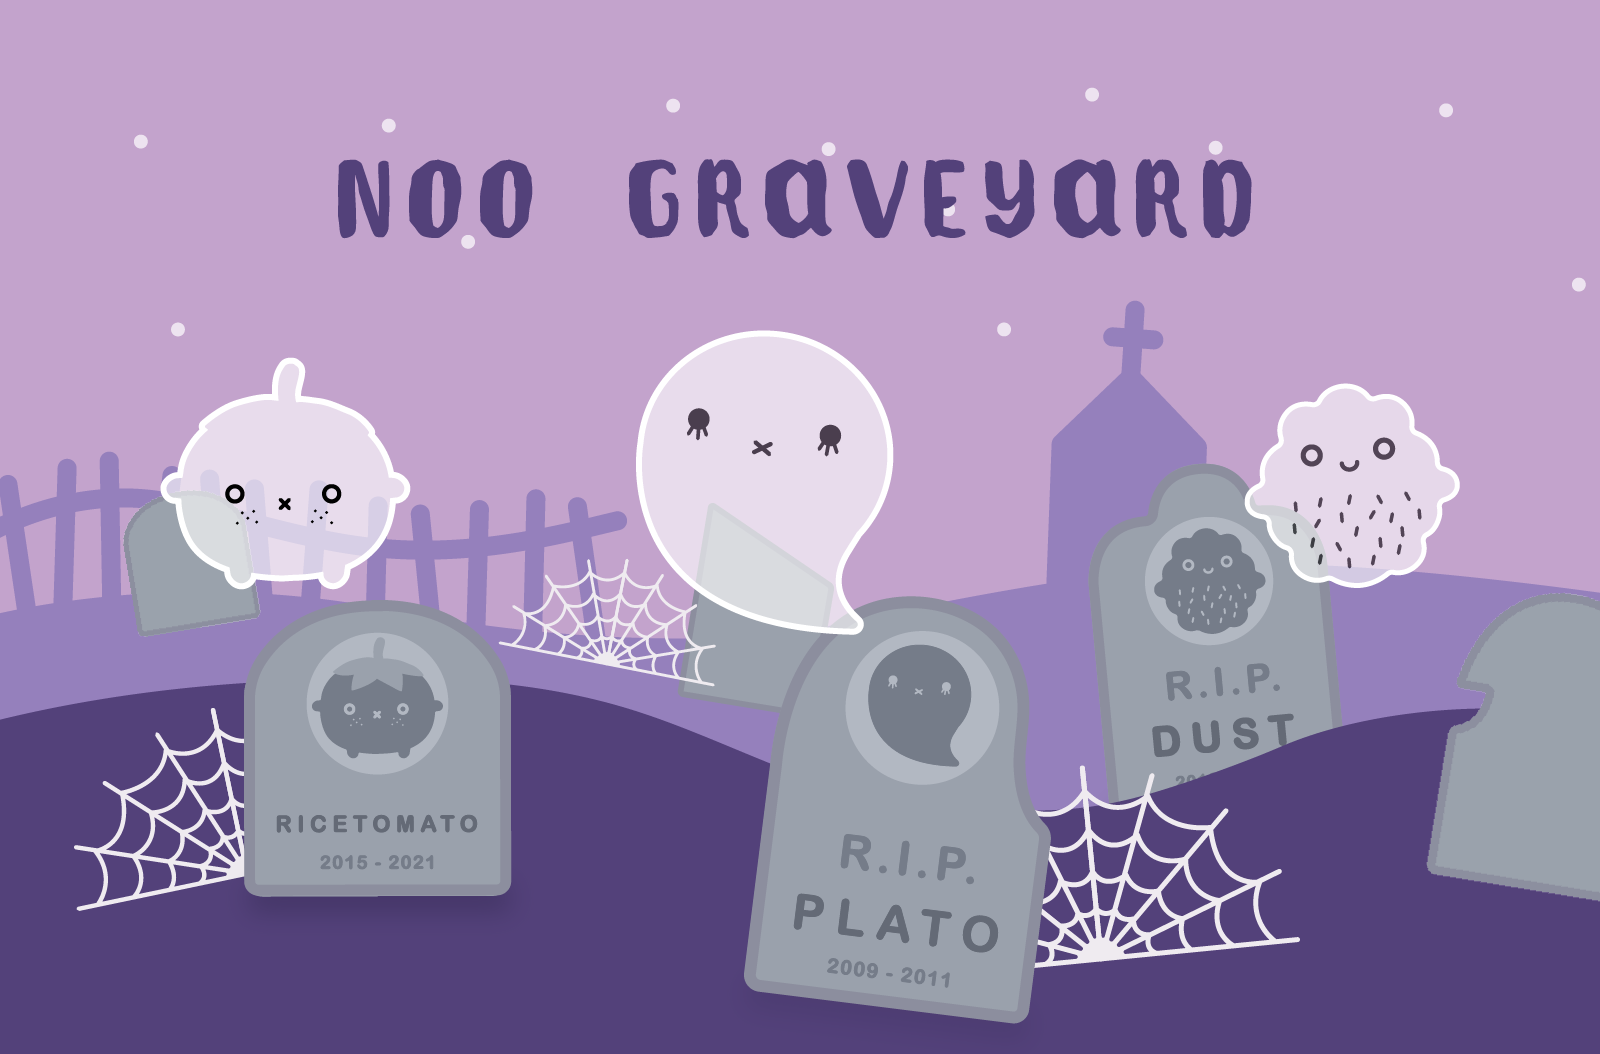 Explore the Noodoll Graveyard